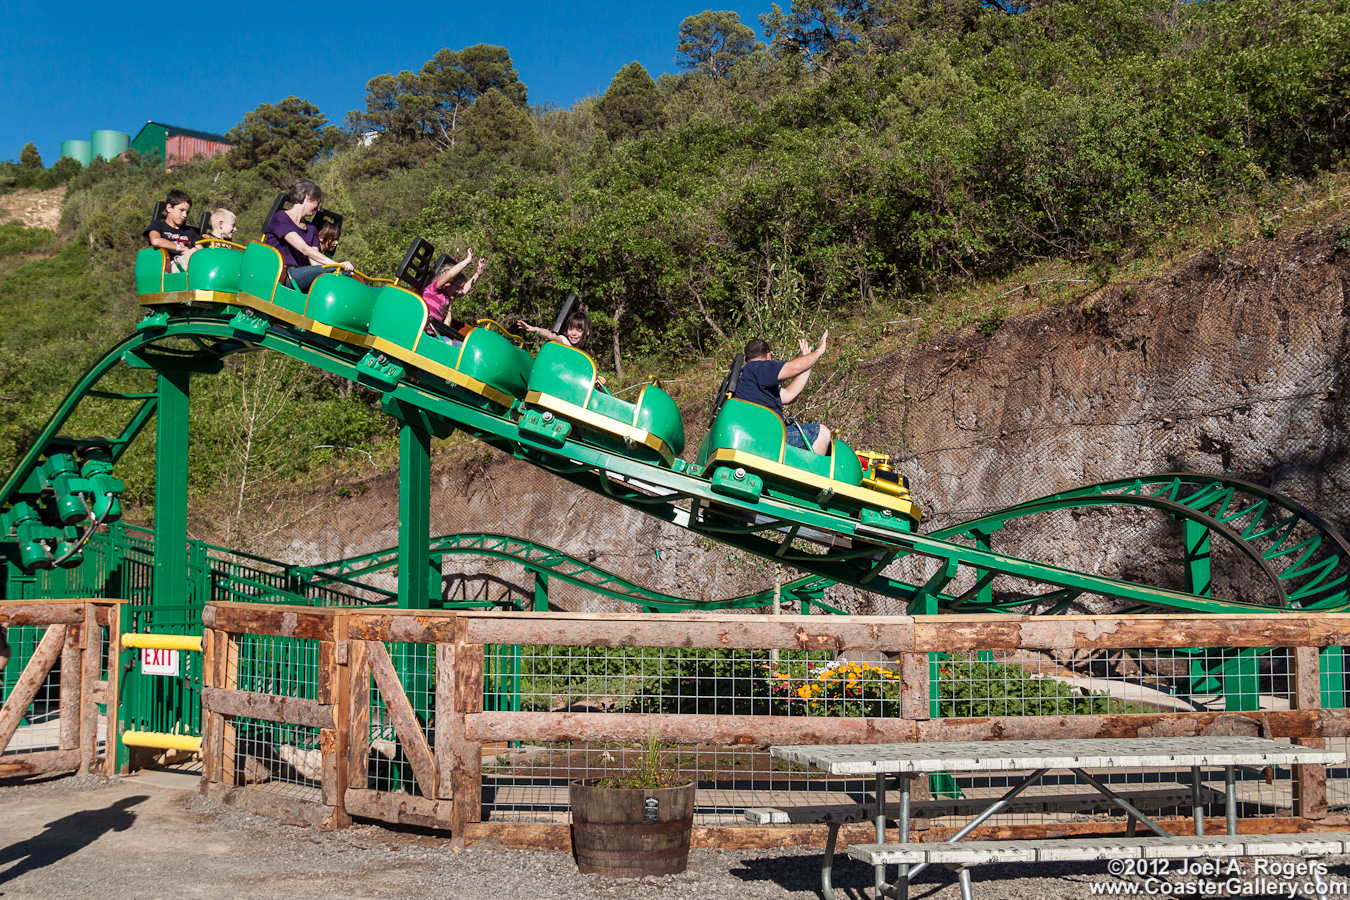 Wild West Express roller coaster